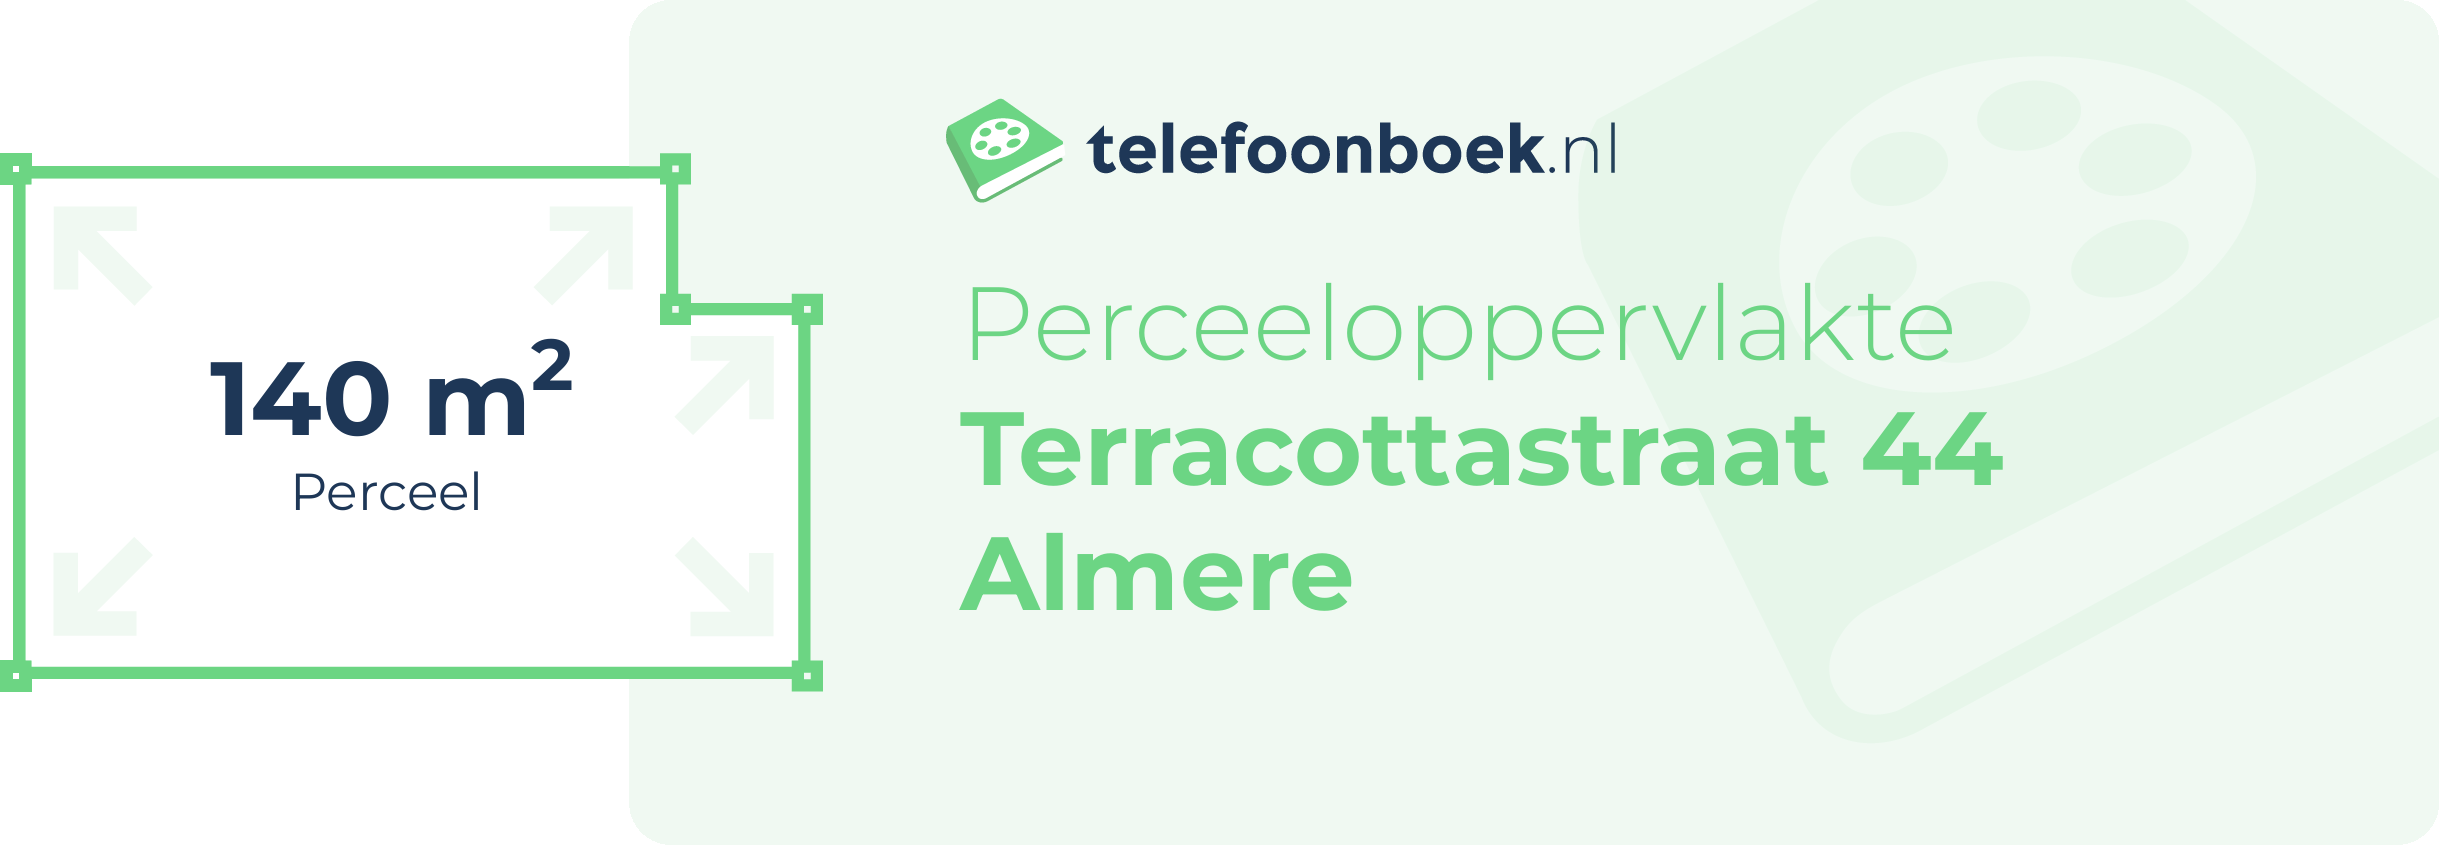 Perceeloppervlakte Terracottastraat 44 Almere